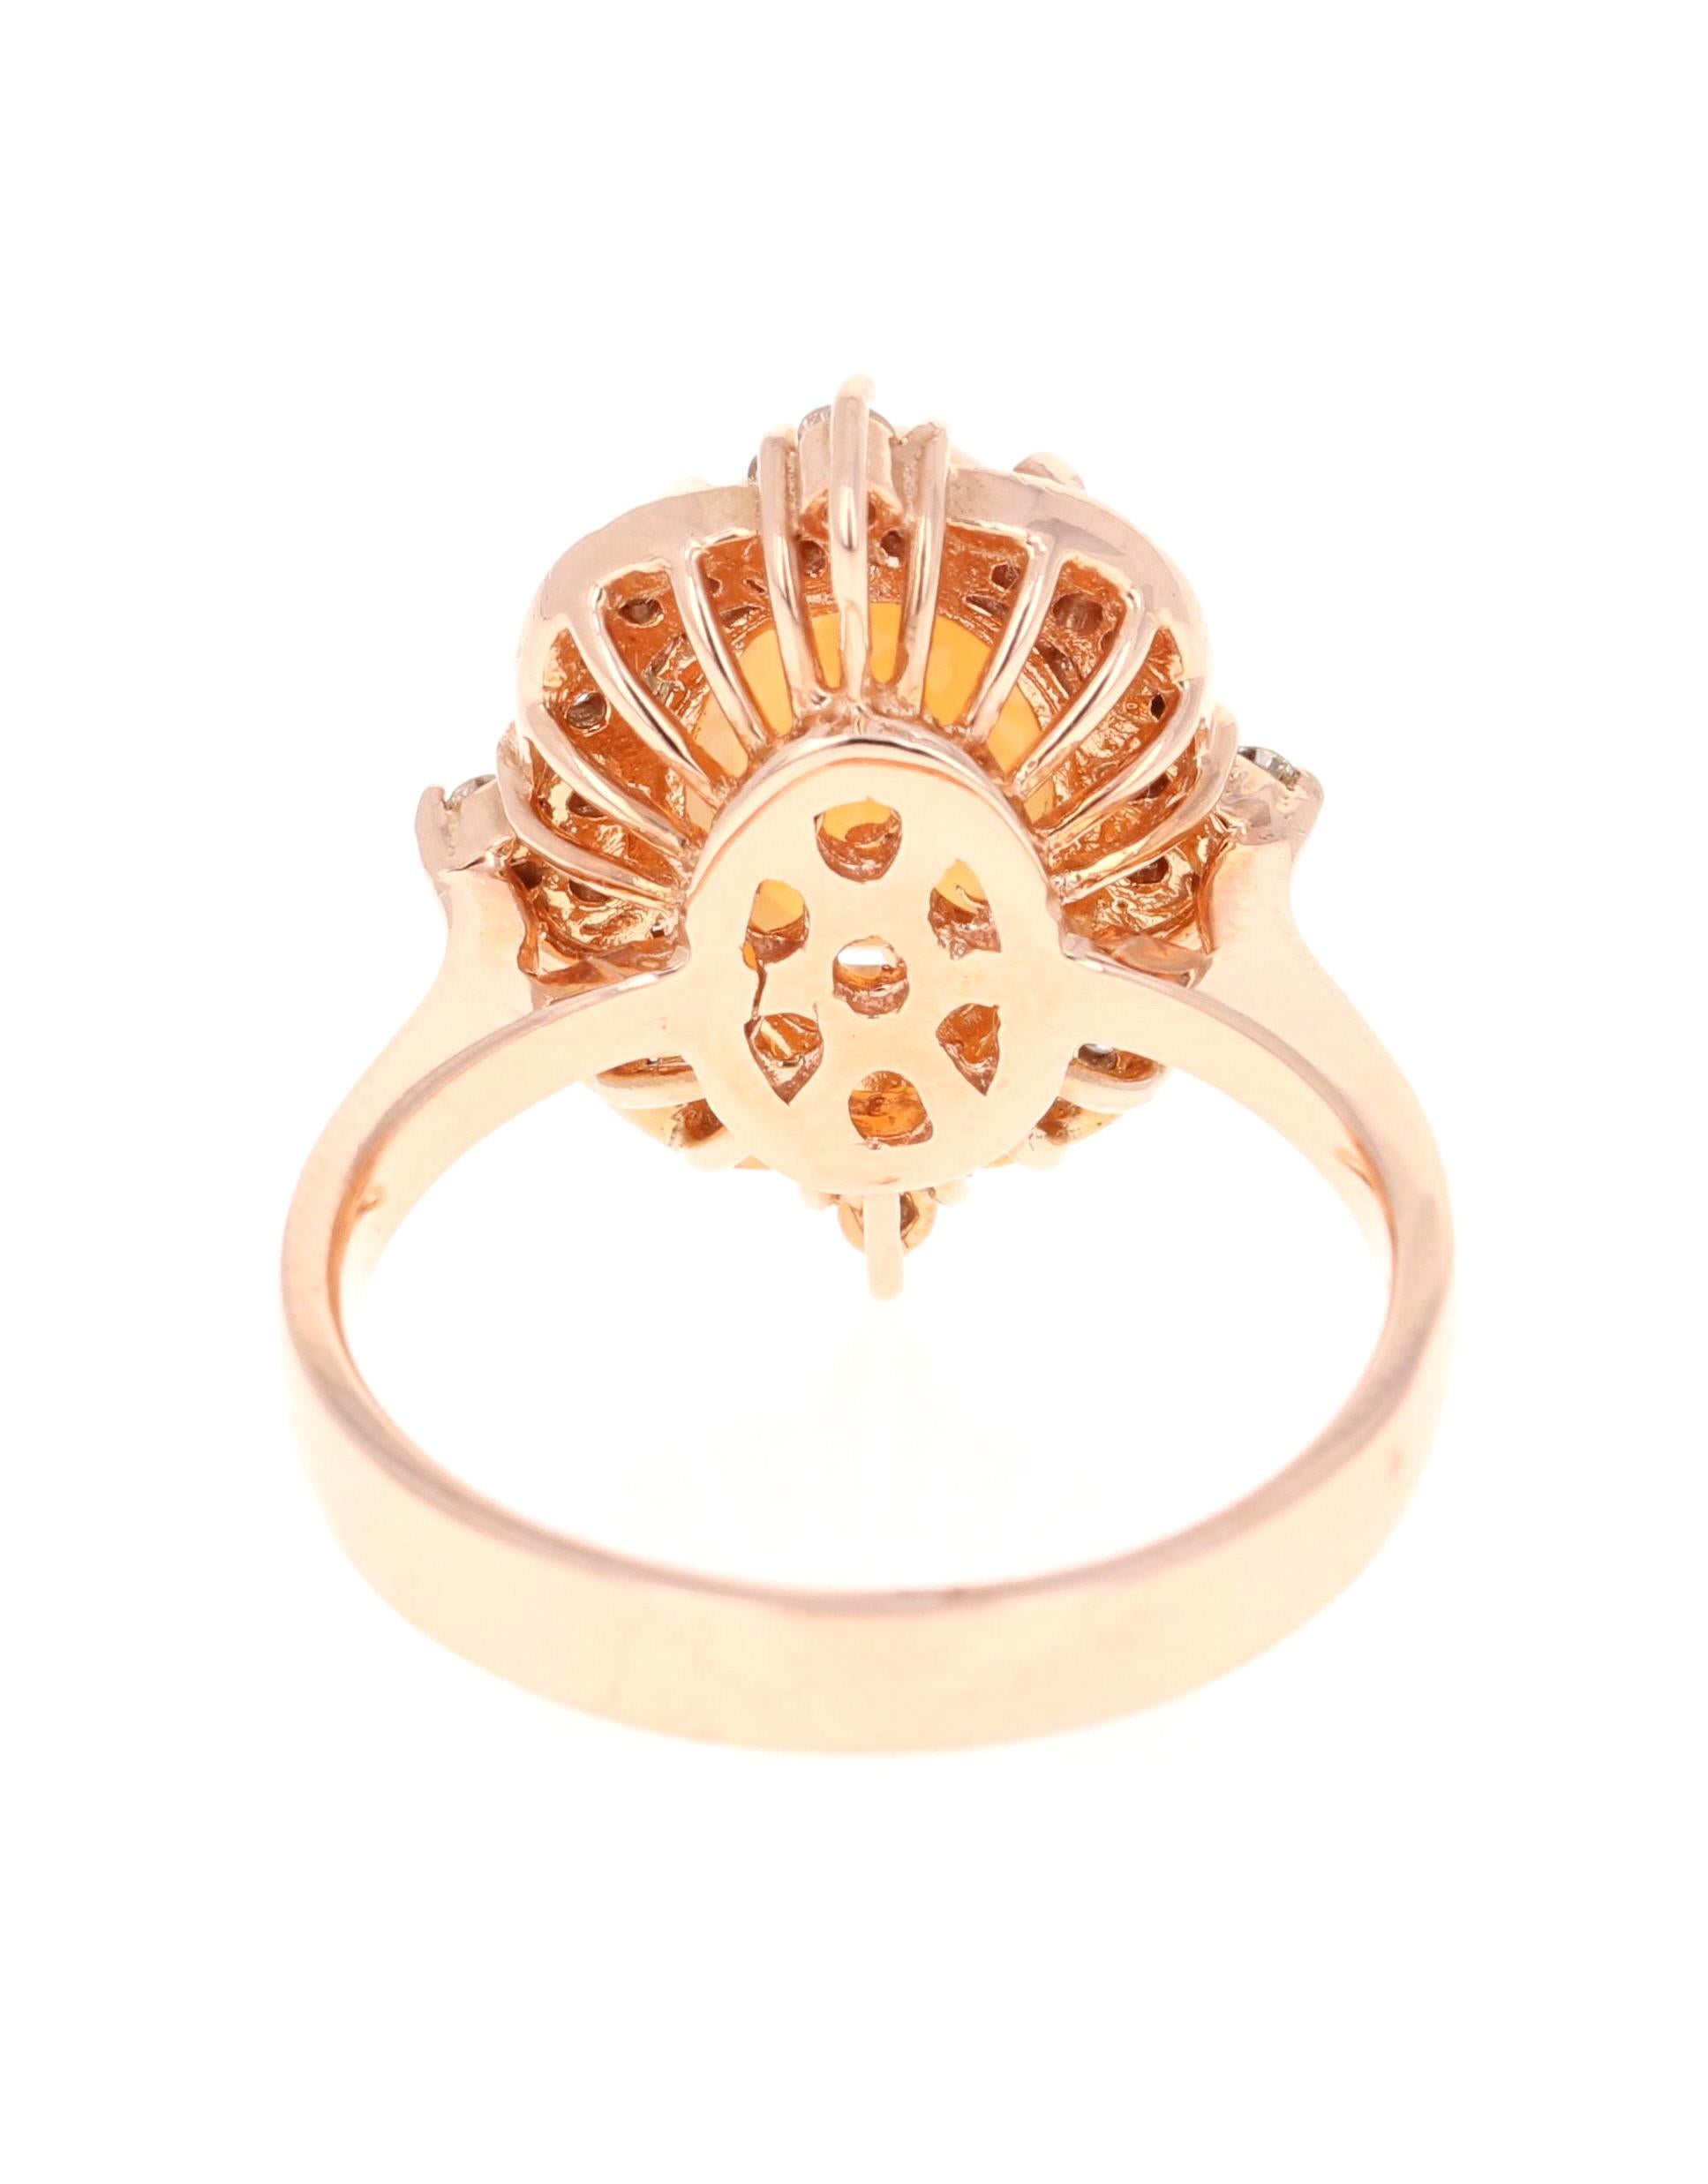 Oval Cut 2.52 Carat Opal Diamond 14 Karat Rose Gold Ring